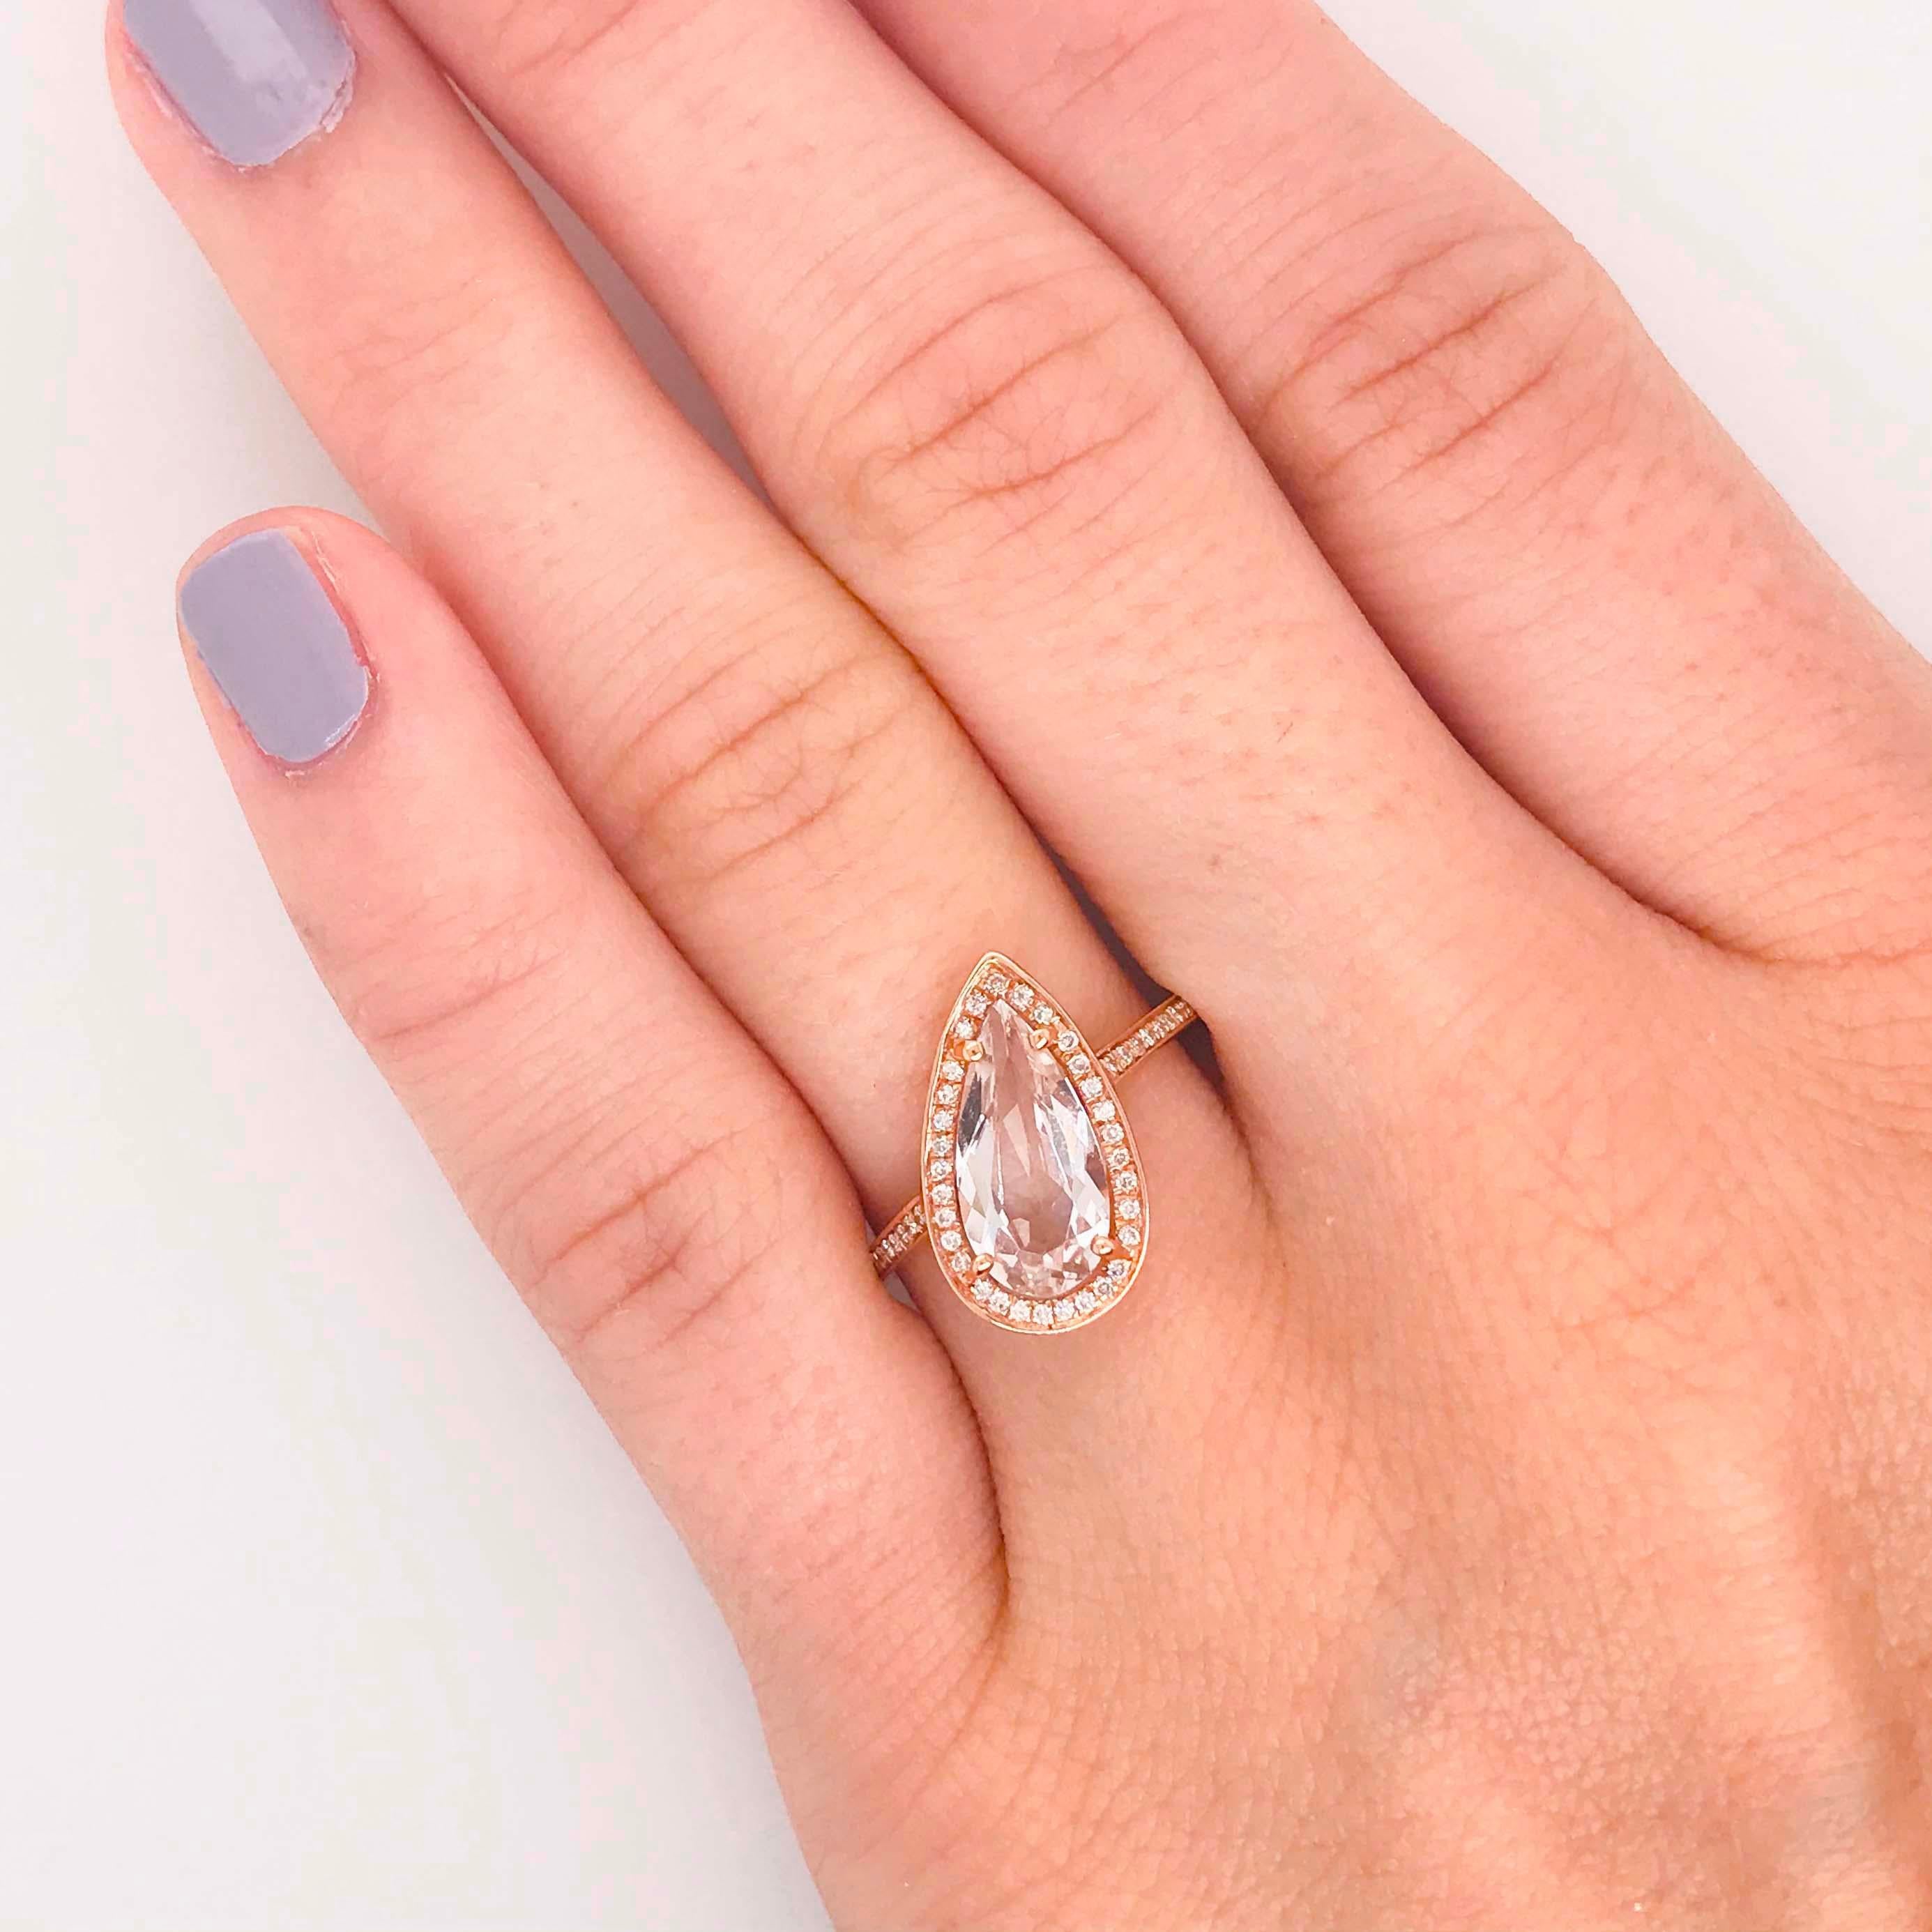 almond shaped diamond ring